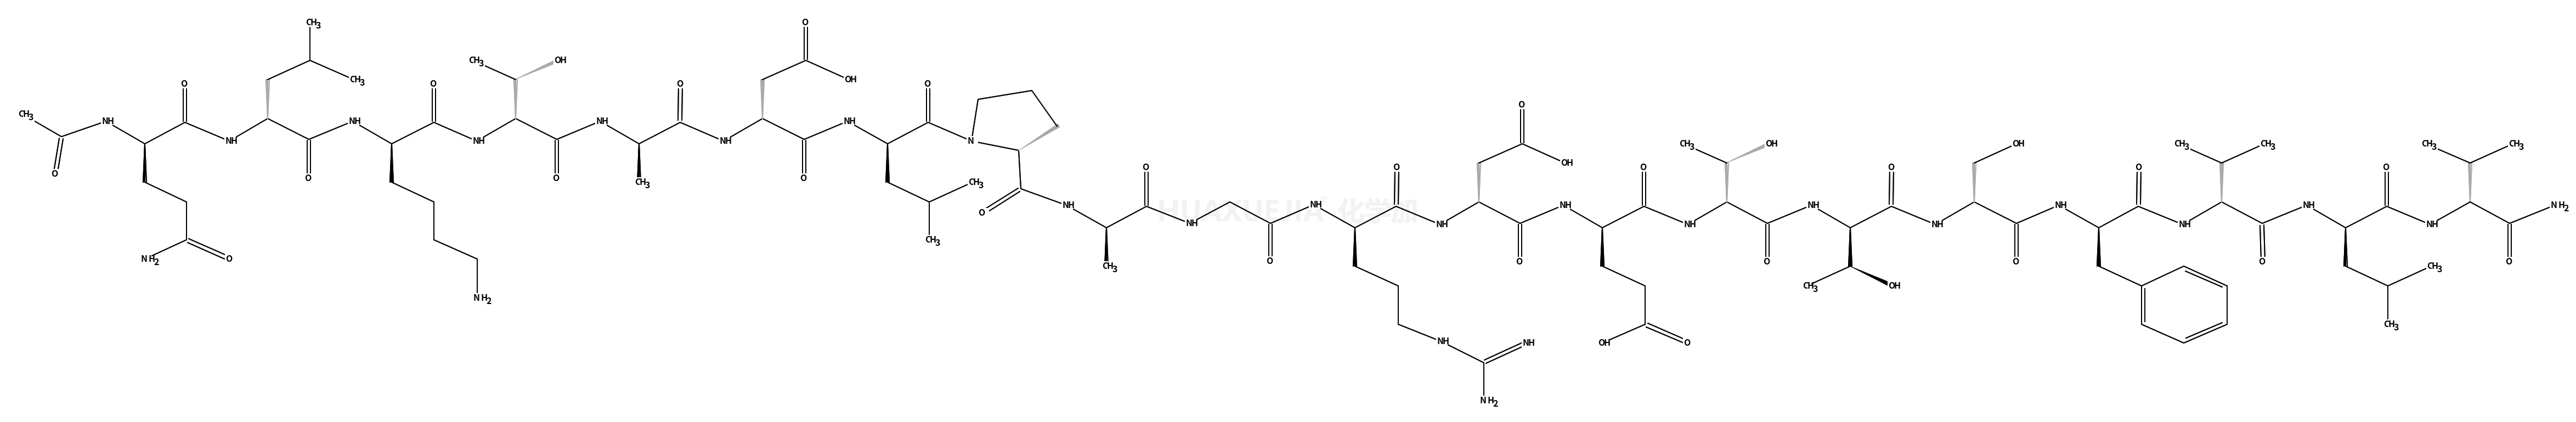 Acetyl-Adhesin (1025-1044) amide